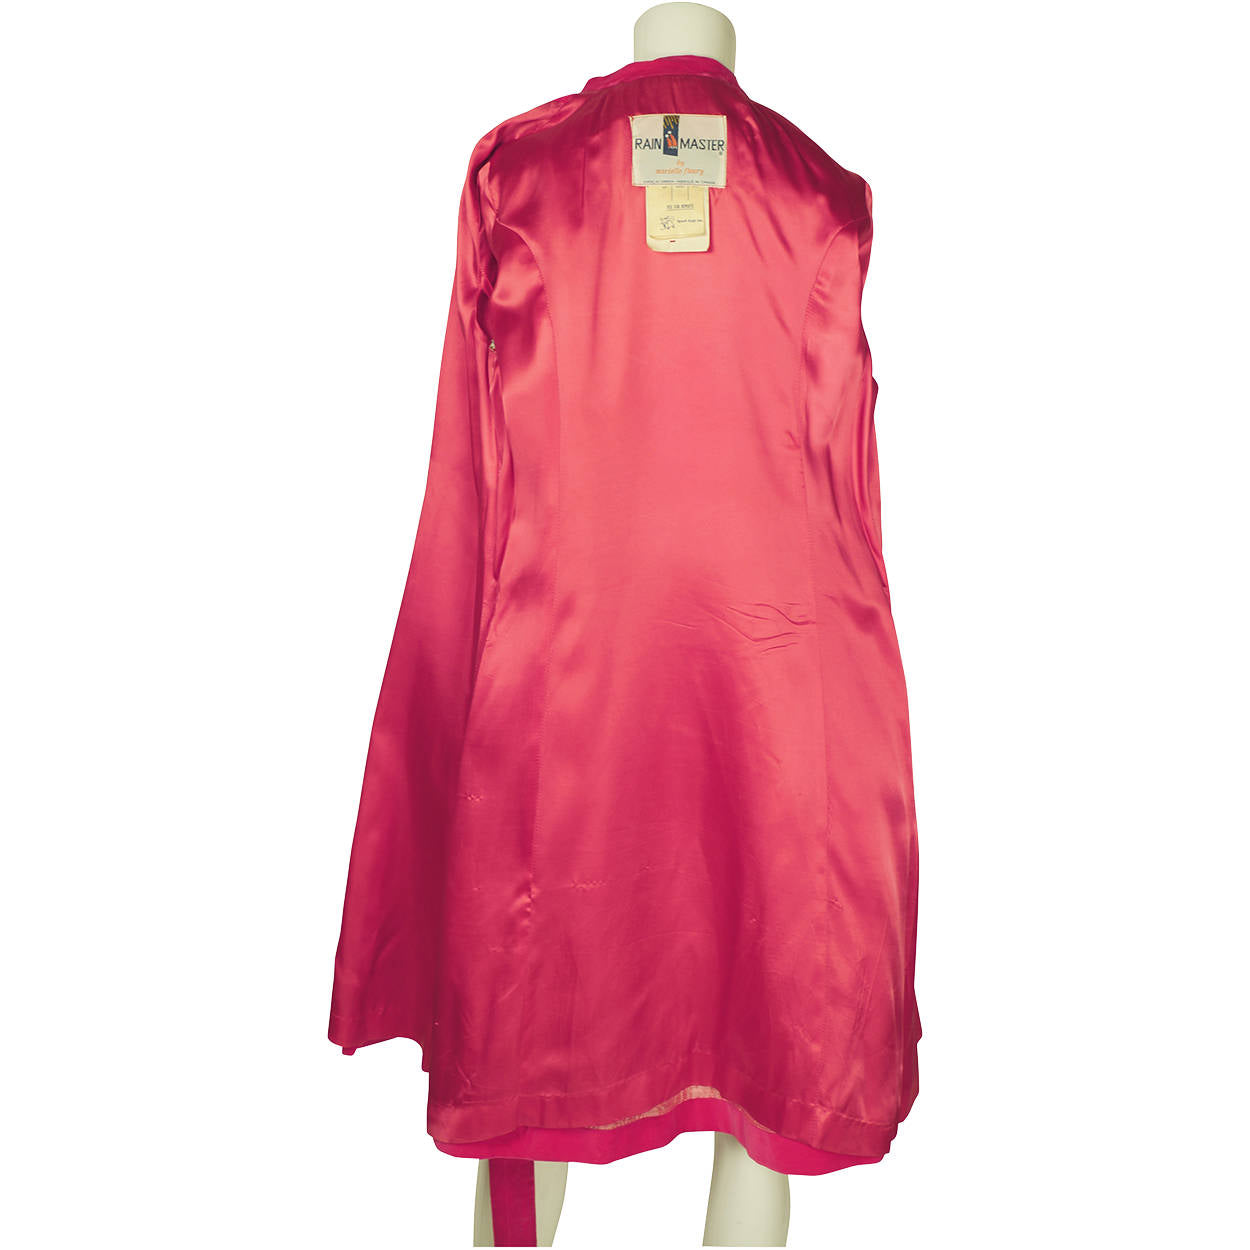 Vintage Pink Velvet Coat by Rainmaster 1970s Canadian Design - Marielle ...